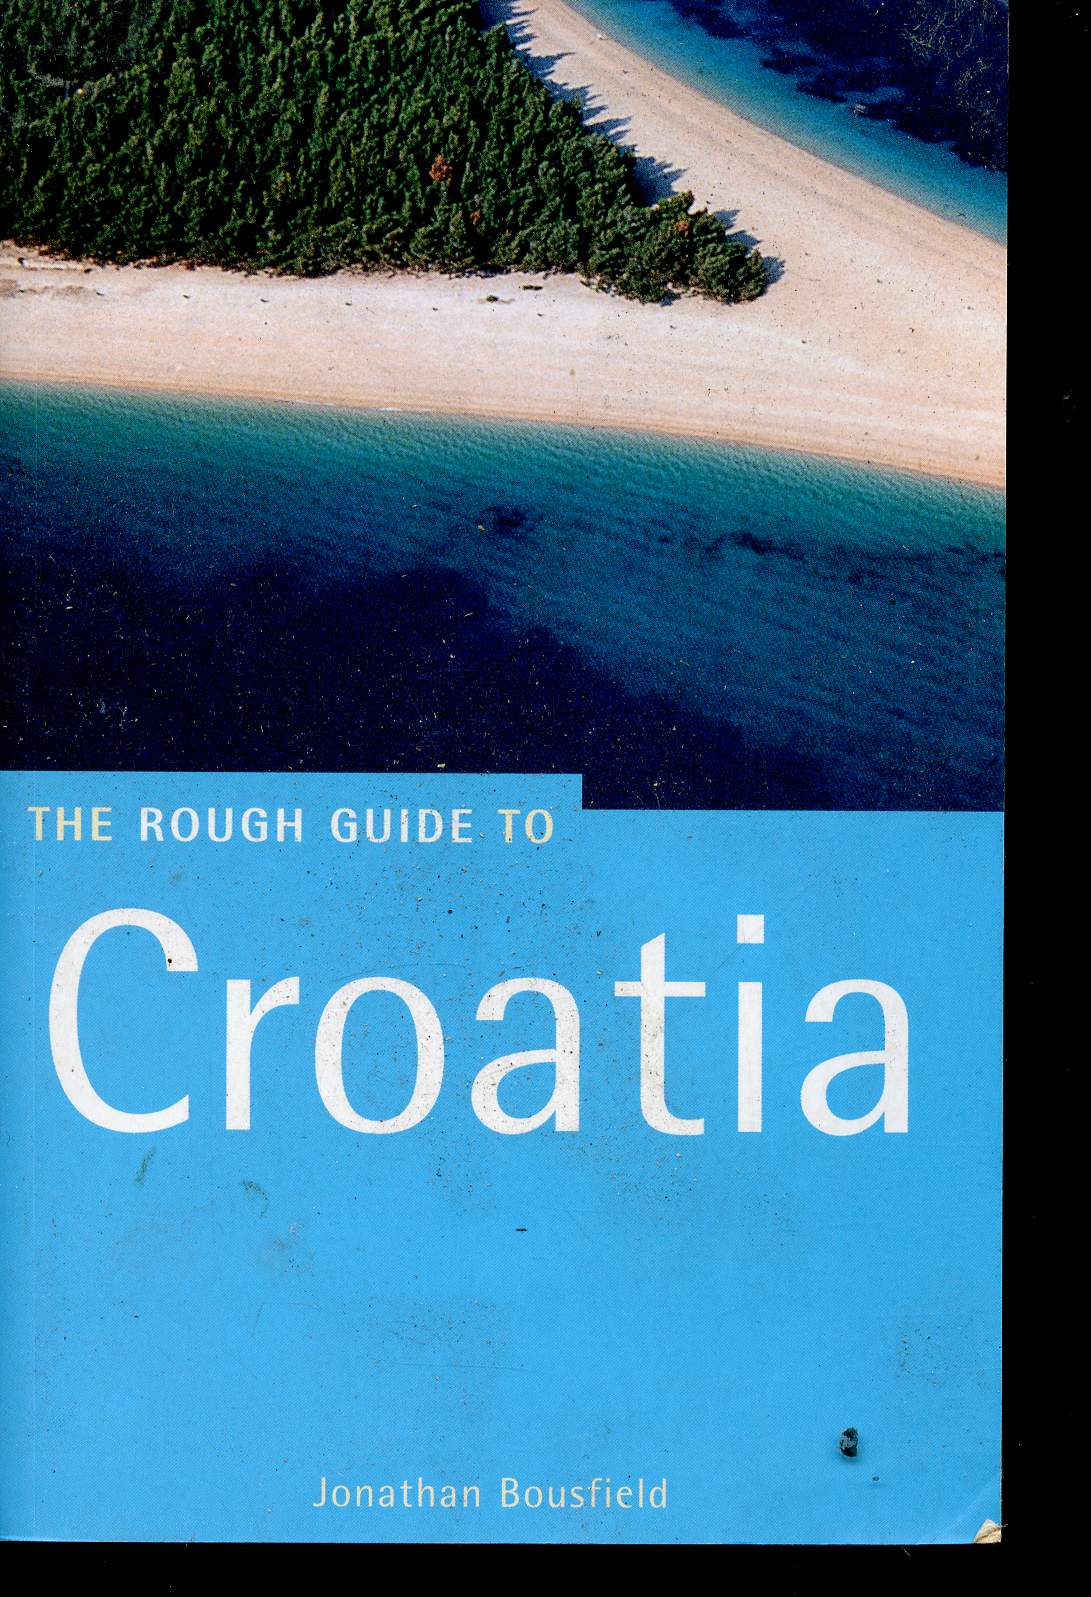 The rough guide to Croatia